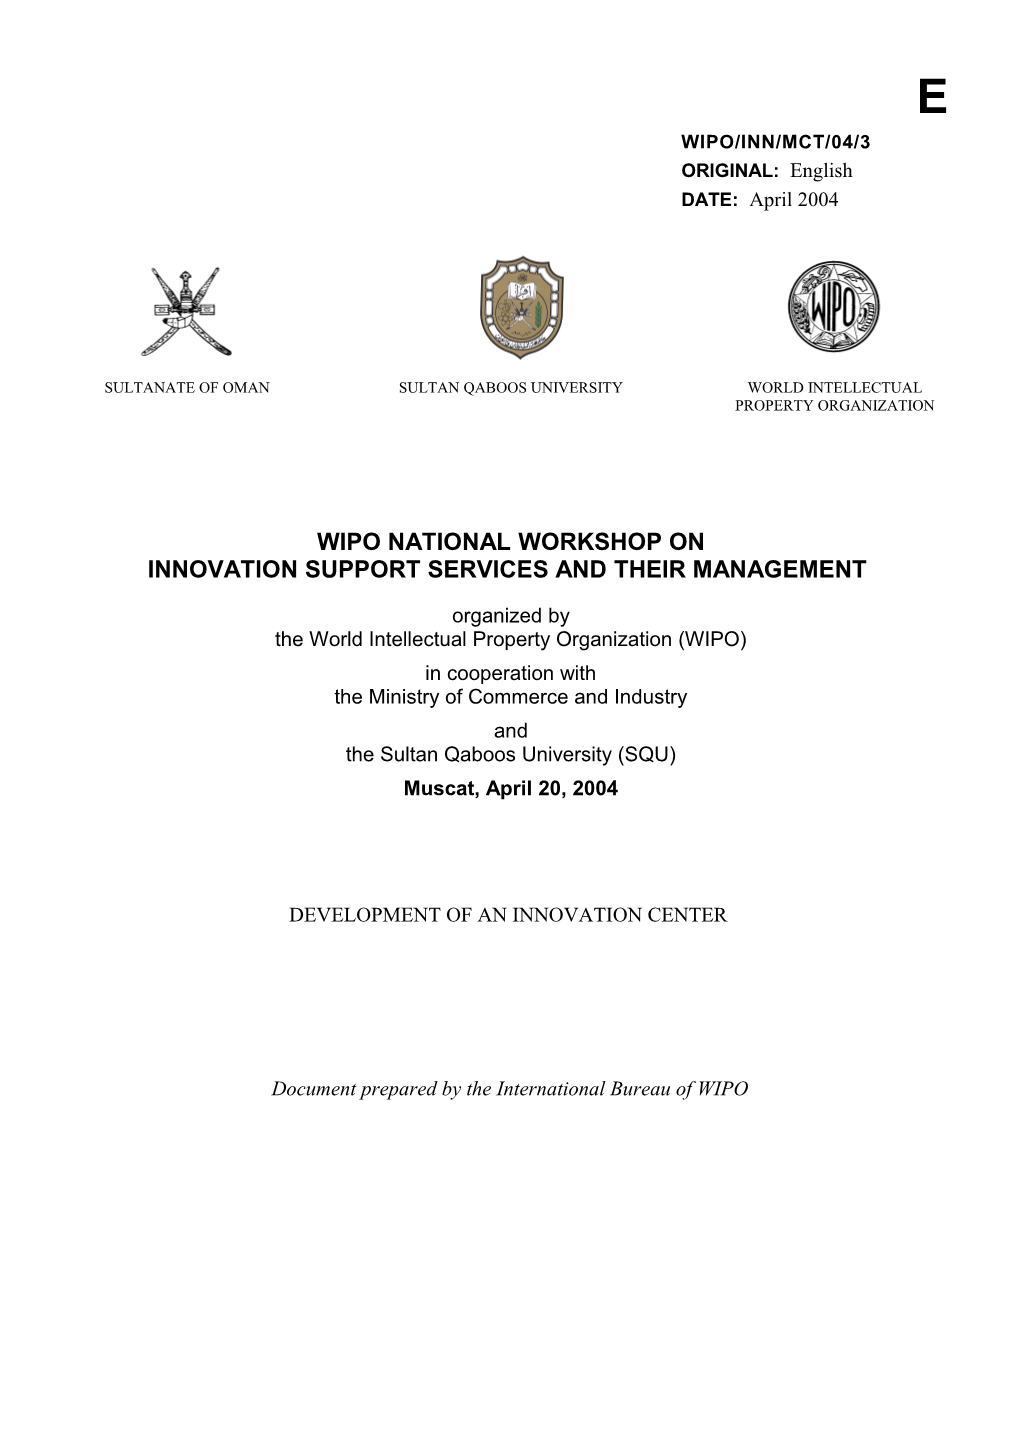 WIPO/INN/MCT/04/3: Development of an Innovation Center